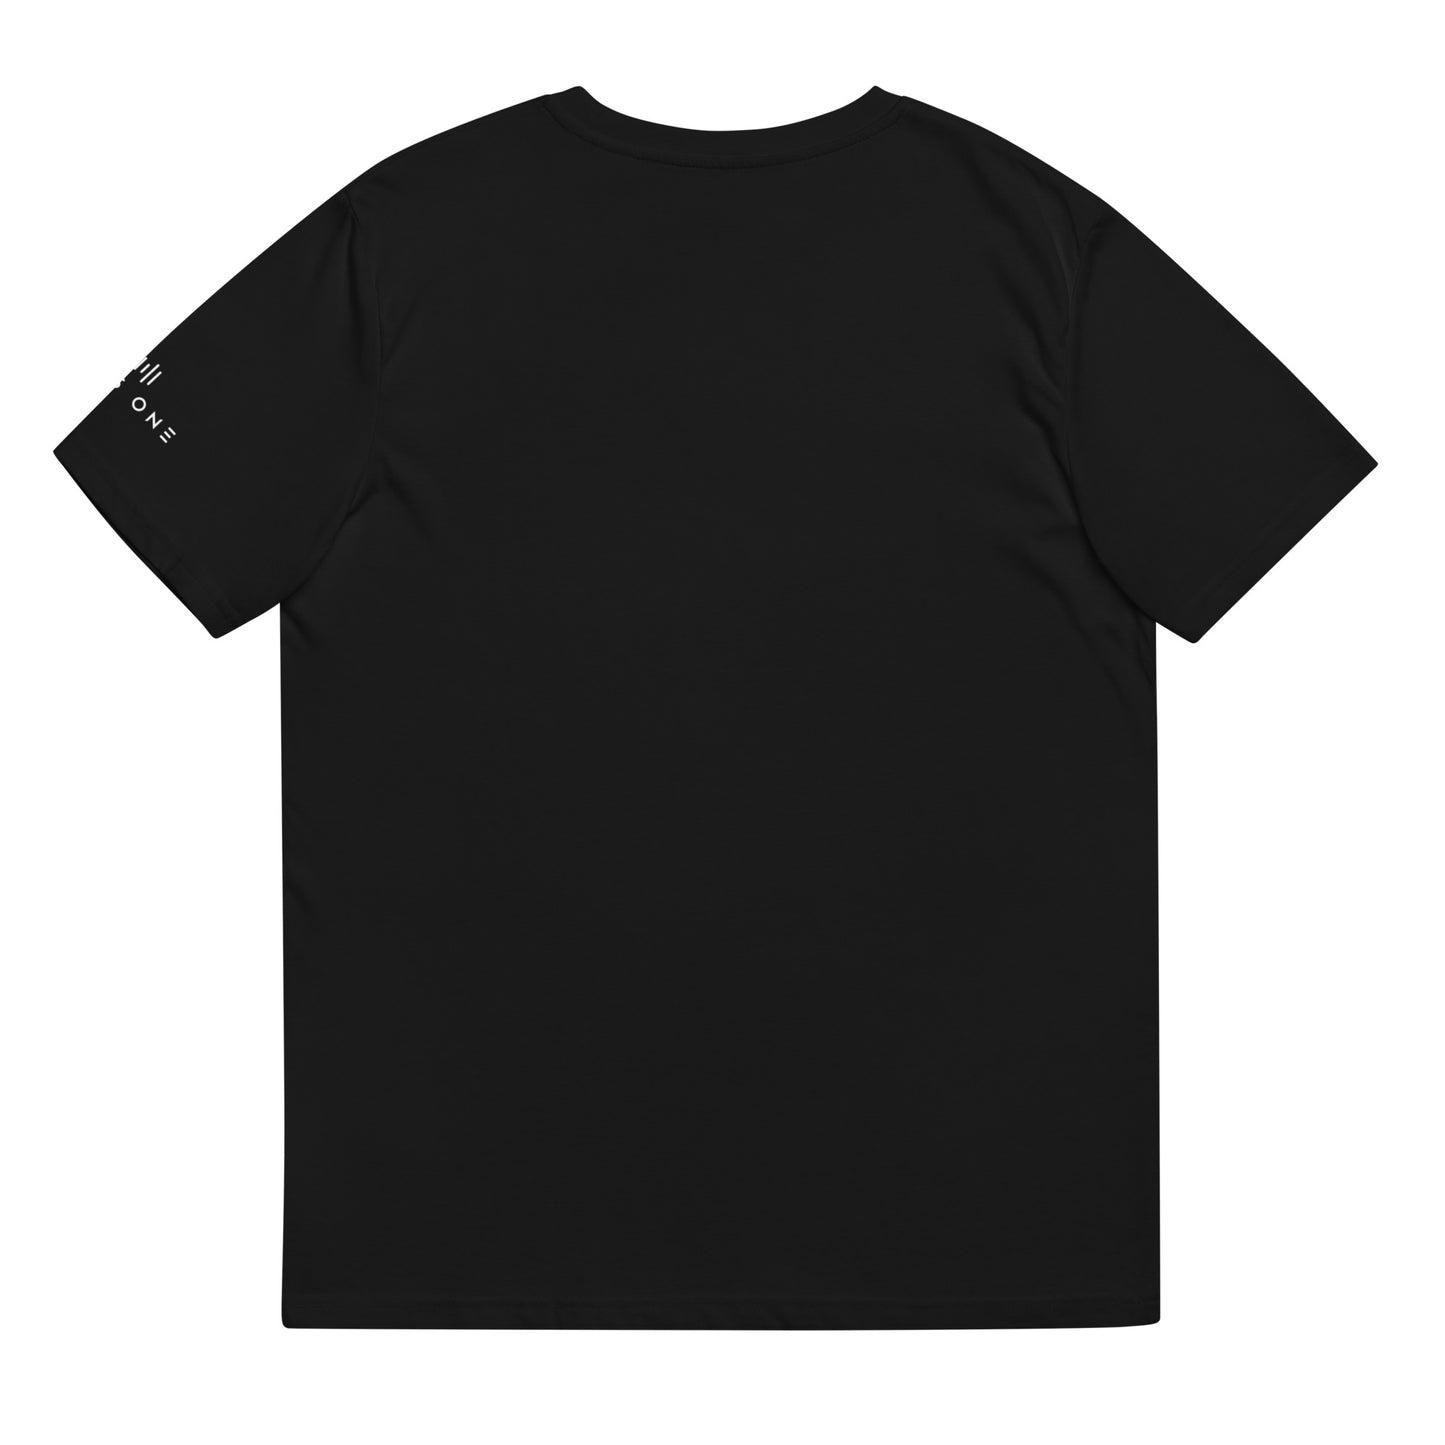 Prototype (v5) Unisex organic cotton t-shirt (White Text)